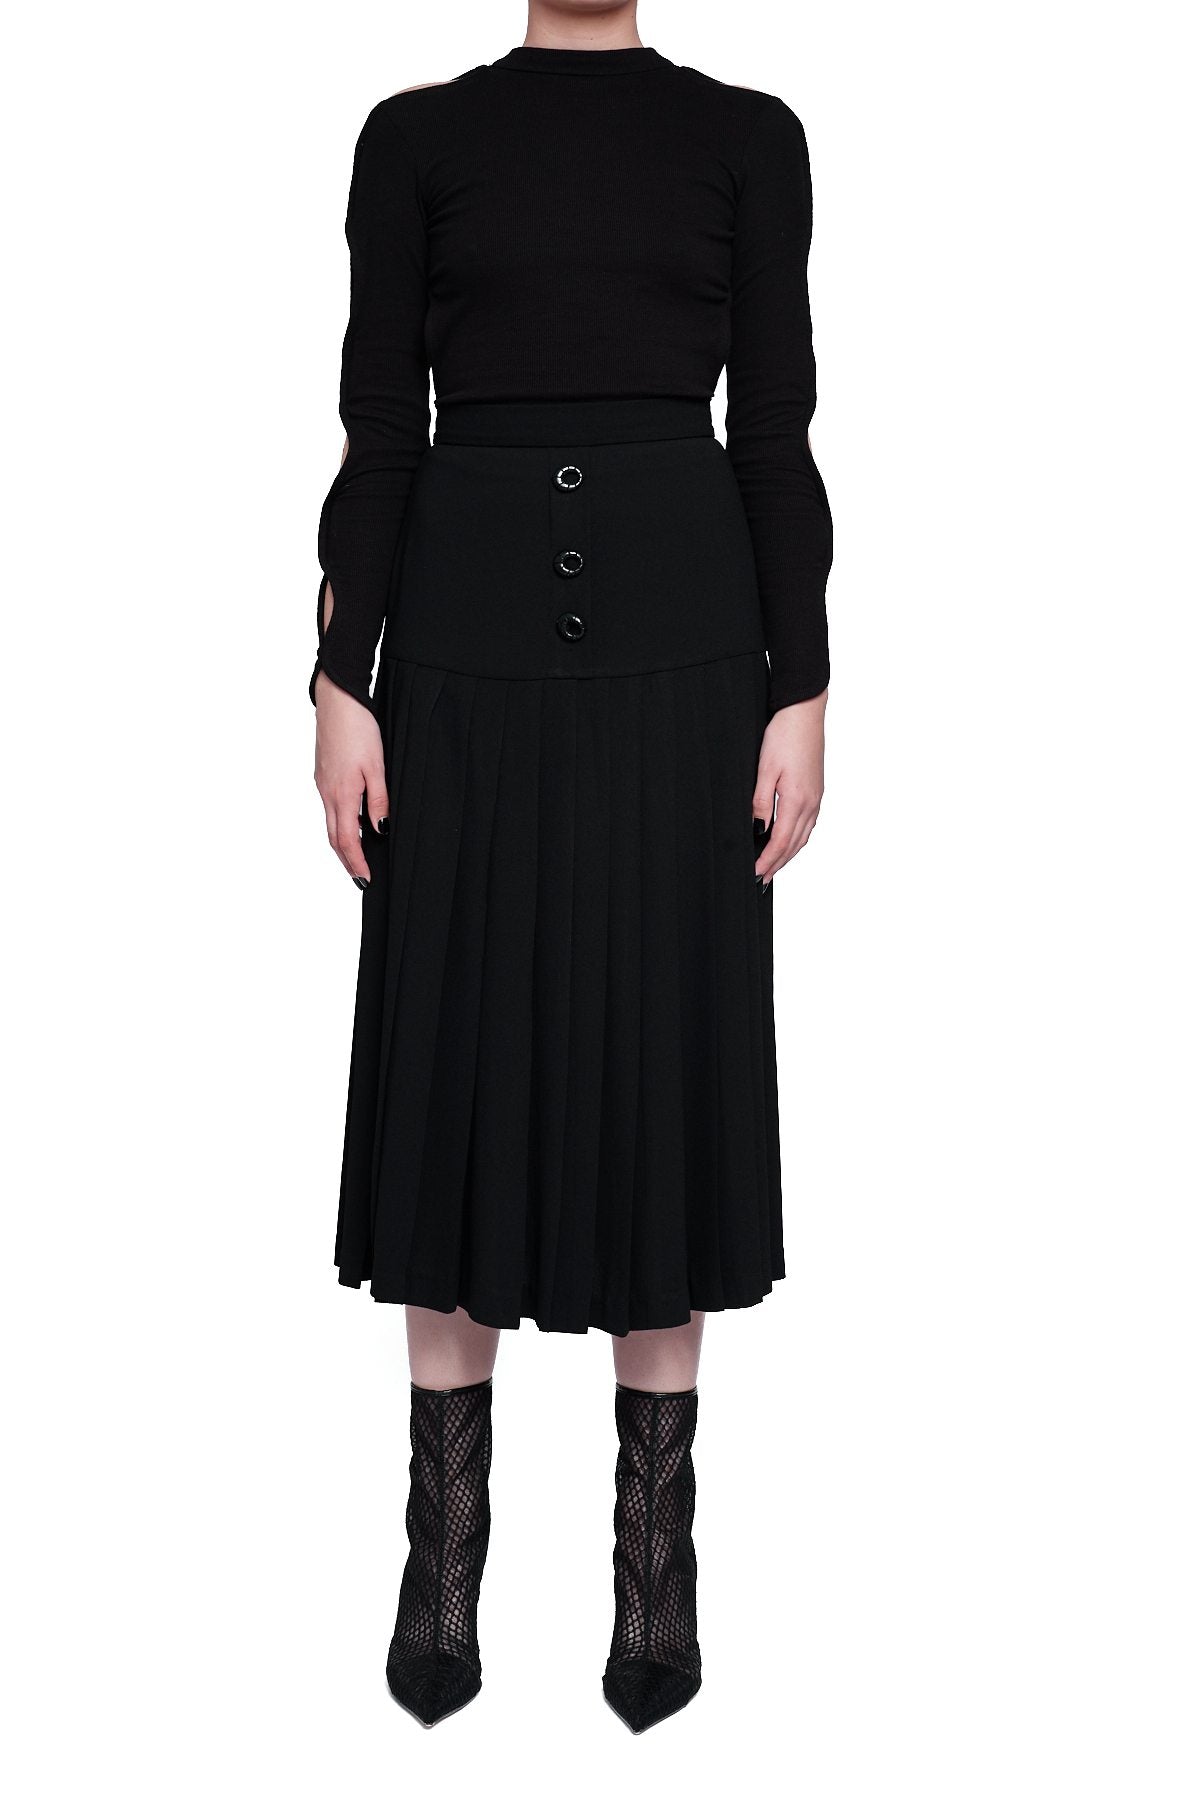 Pleated Black Skirt - Shantall Lacayo